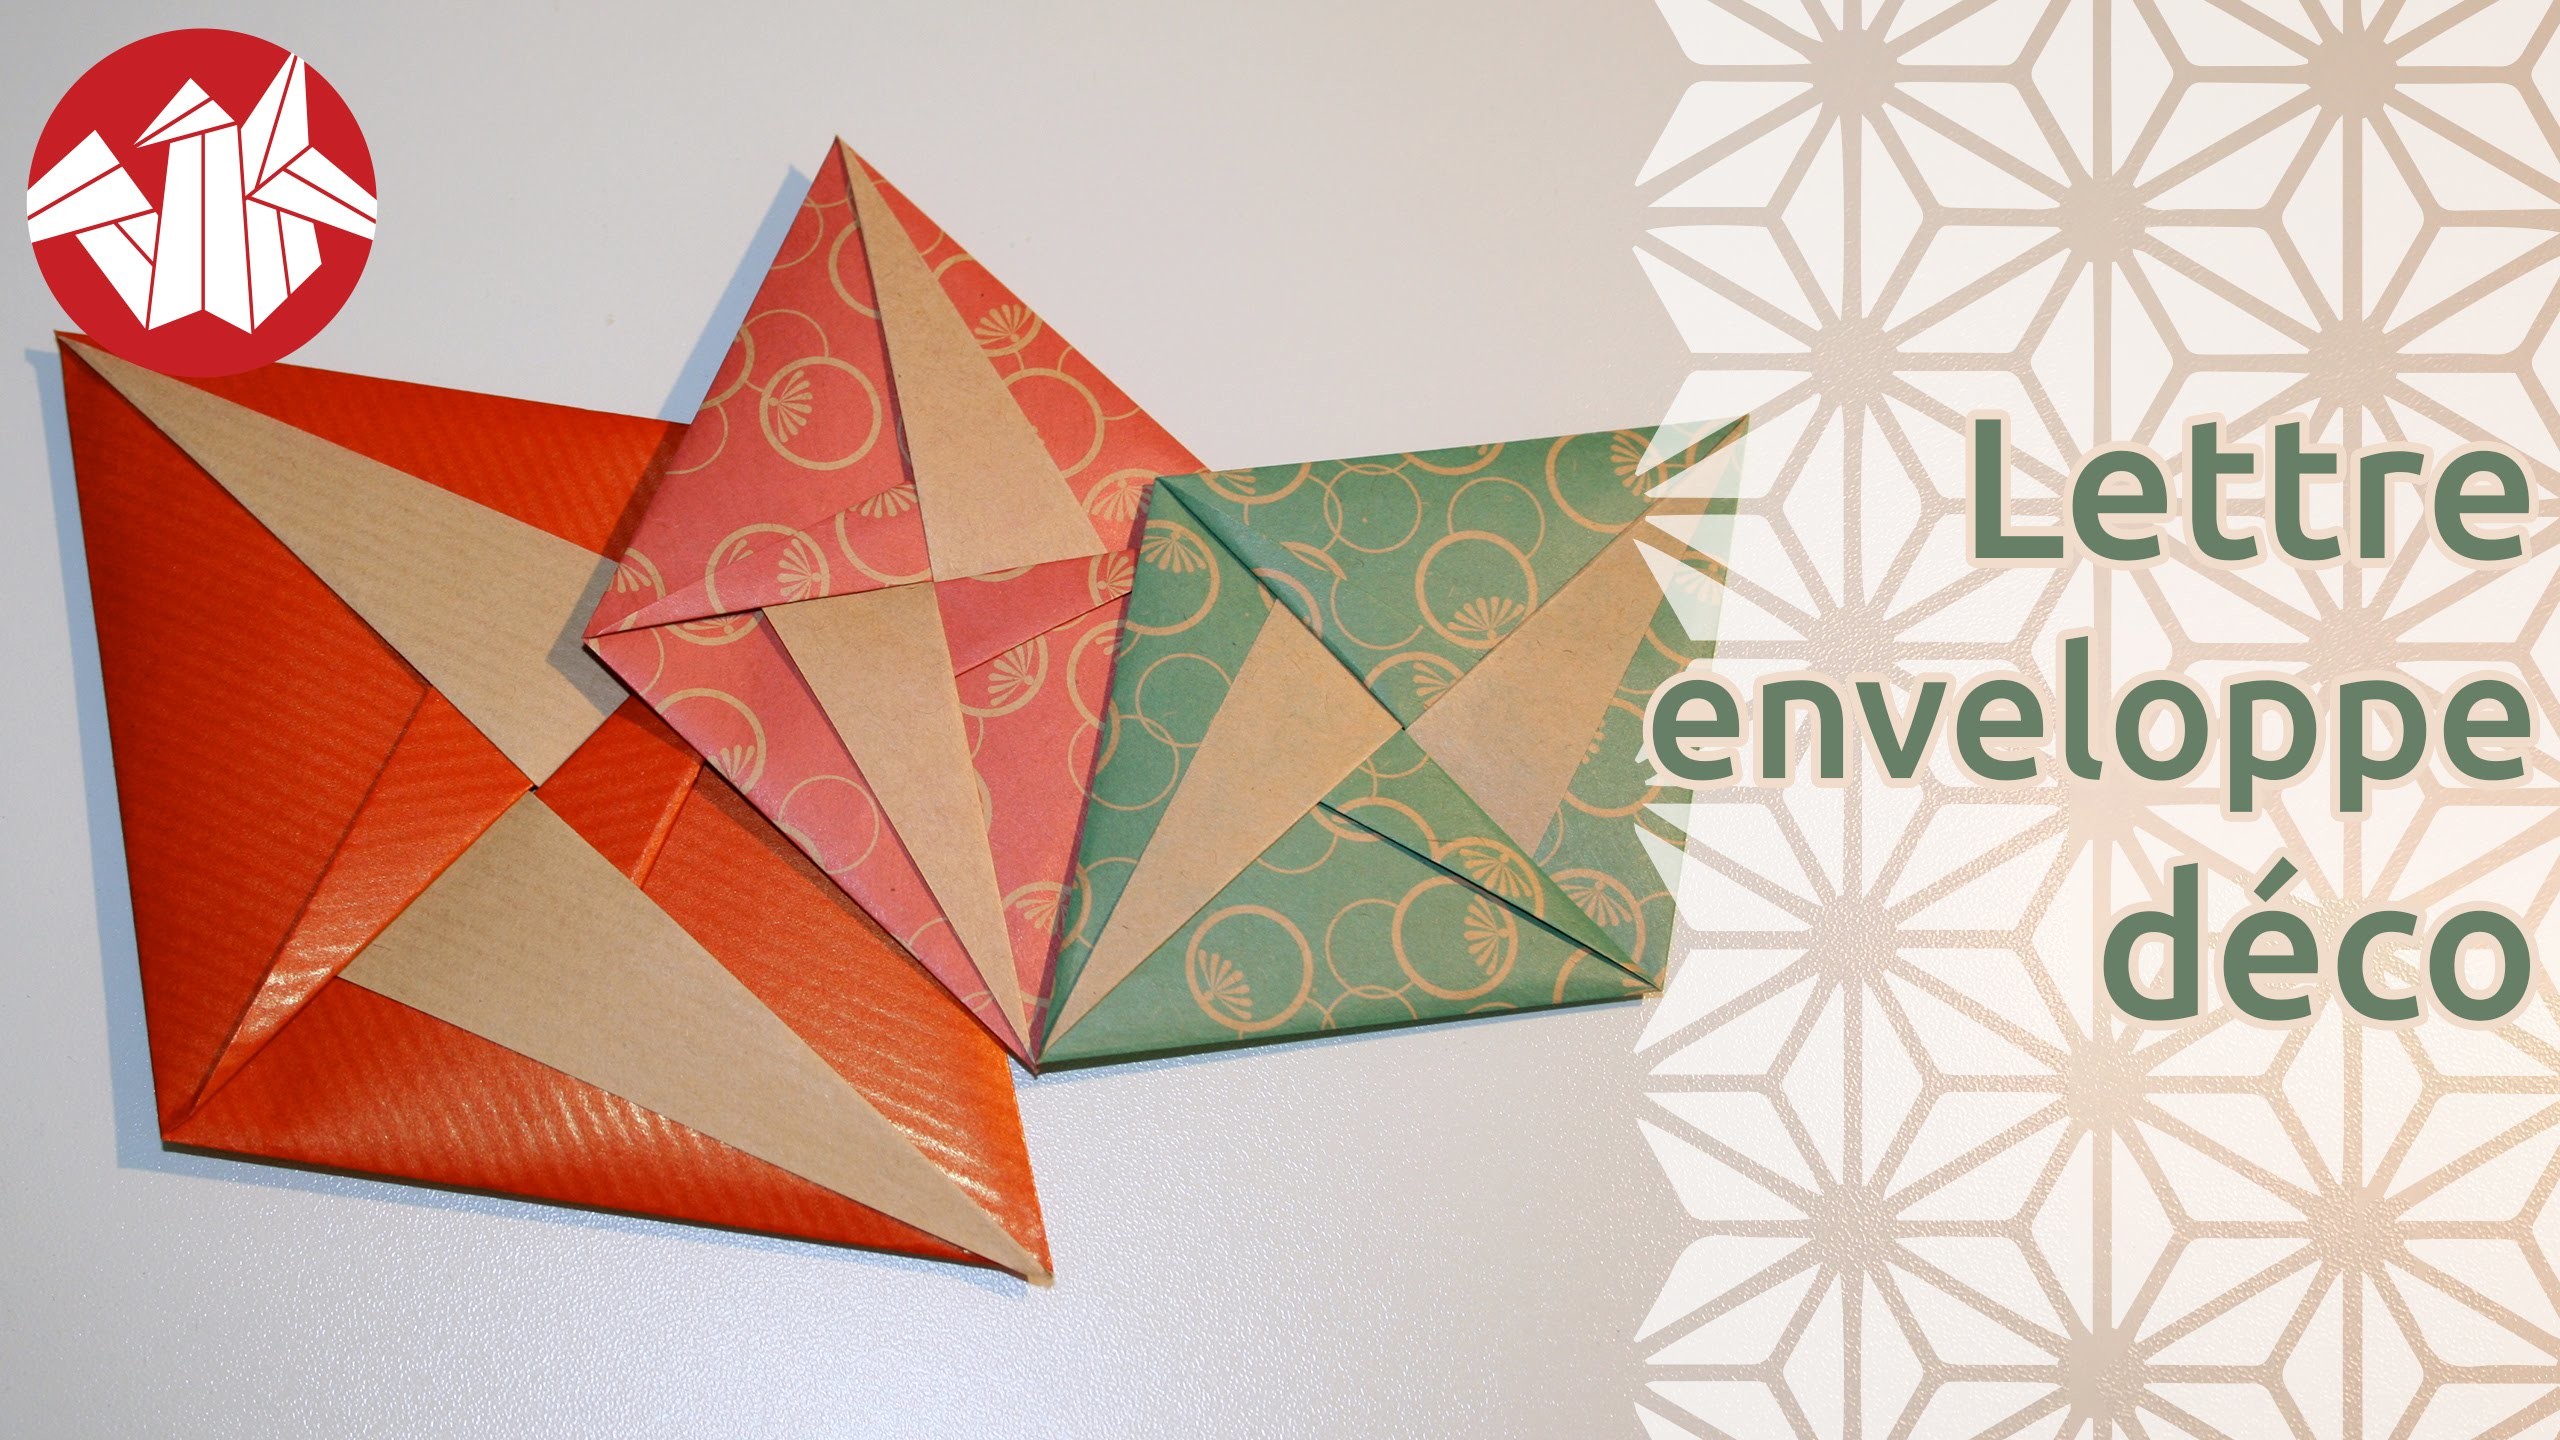 Origami - Lettre-enveloppe déco de Tomoko Fuse [Senbazuru]